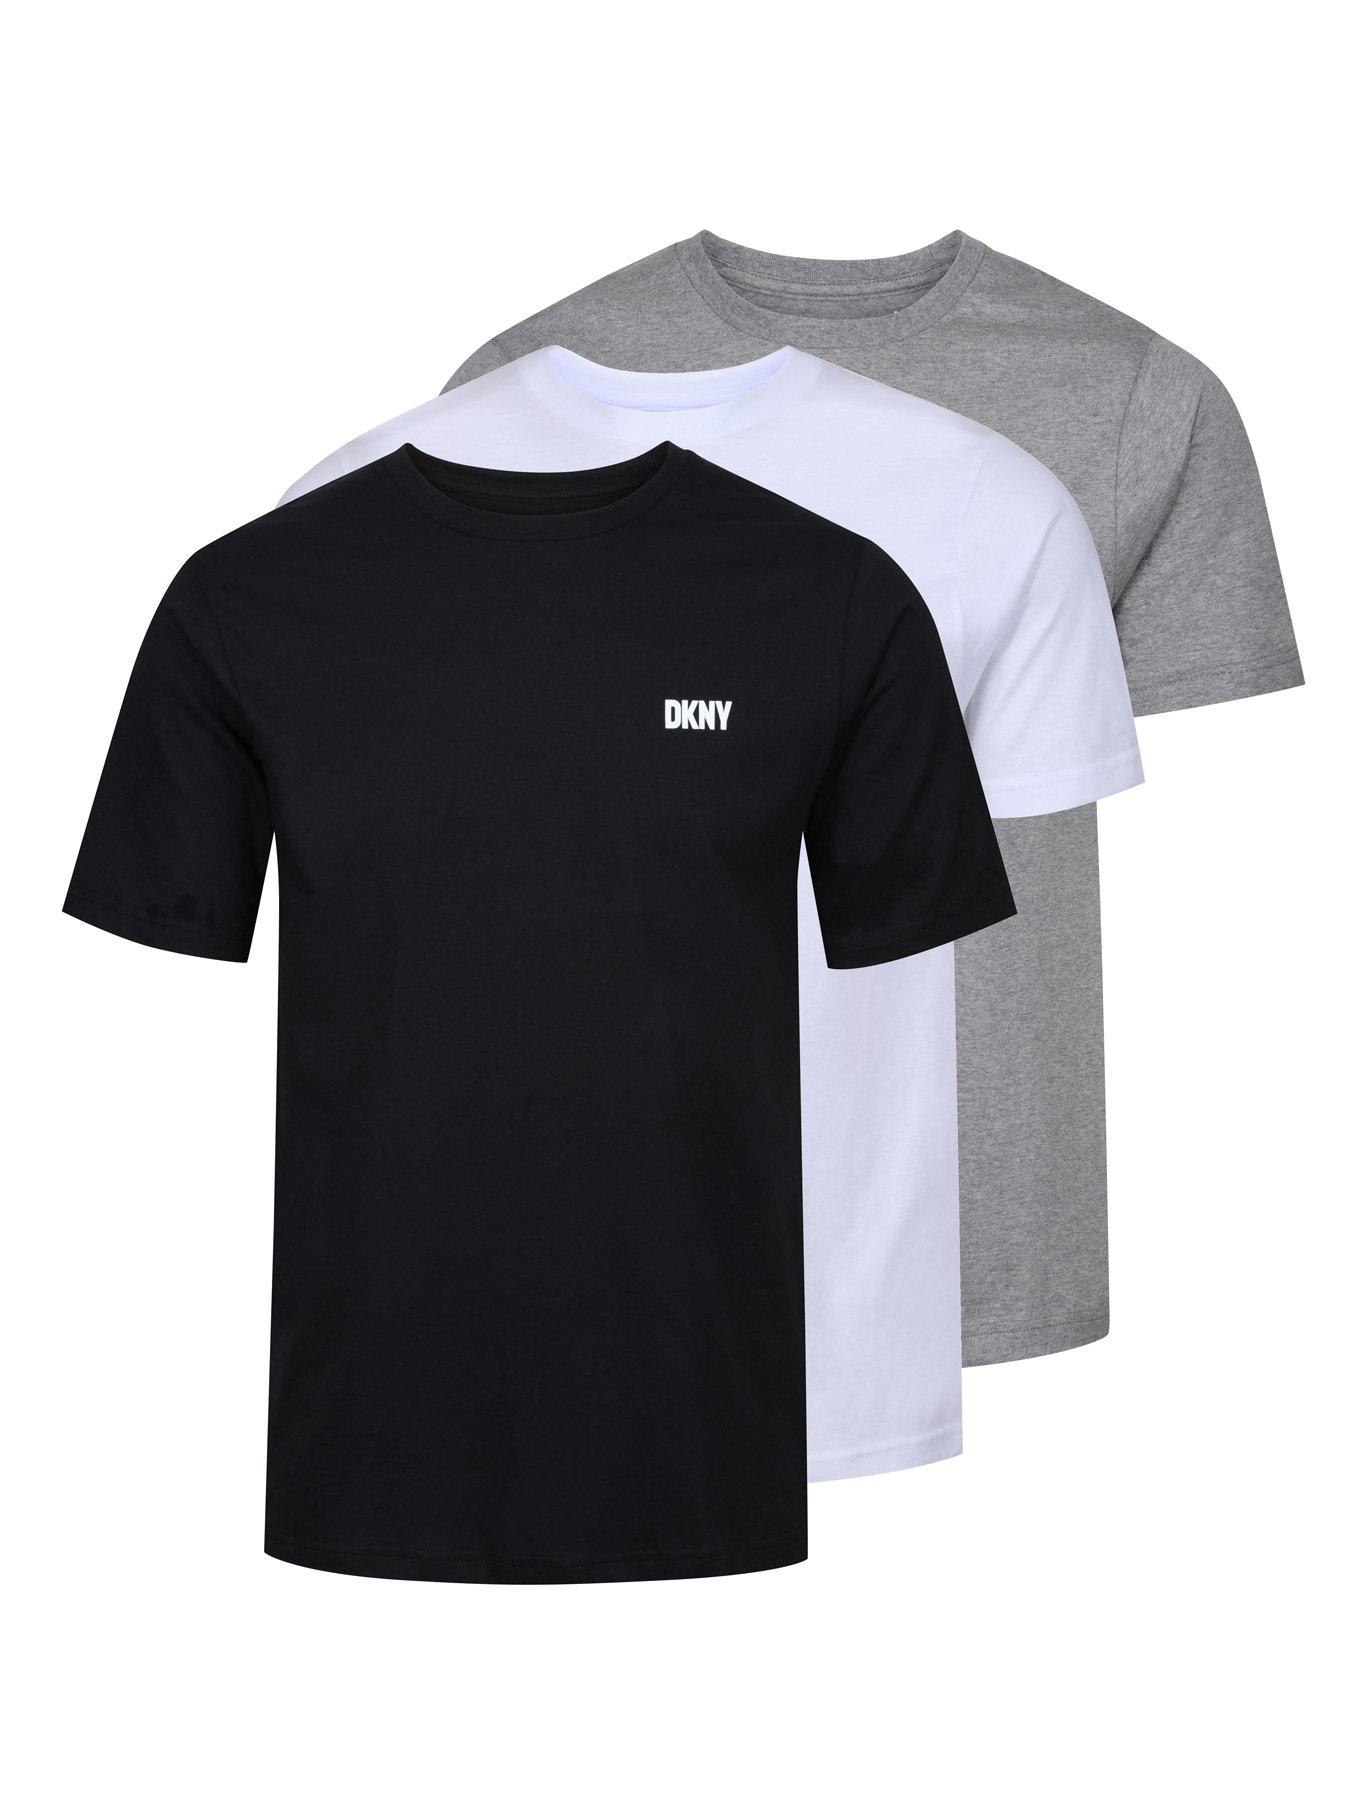 Giants DKNY Very T-shirt Multi | - Pack Ireland 3